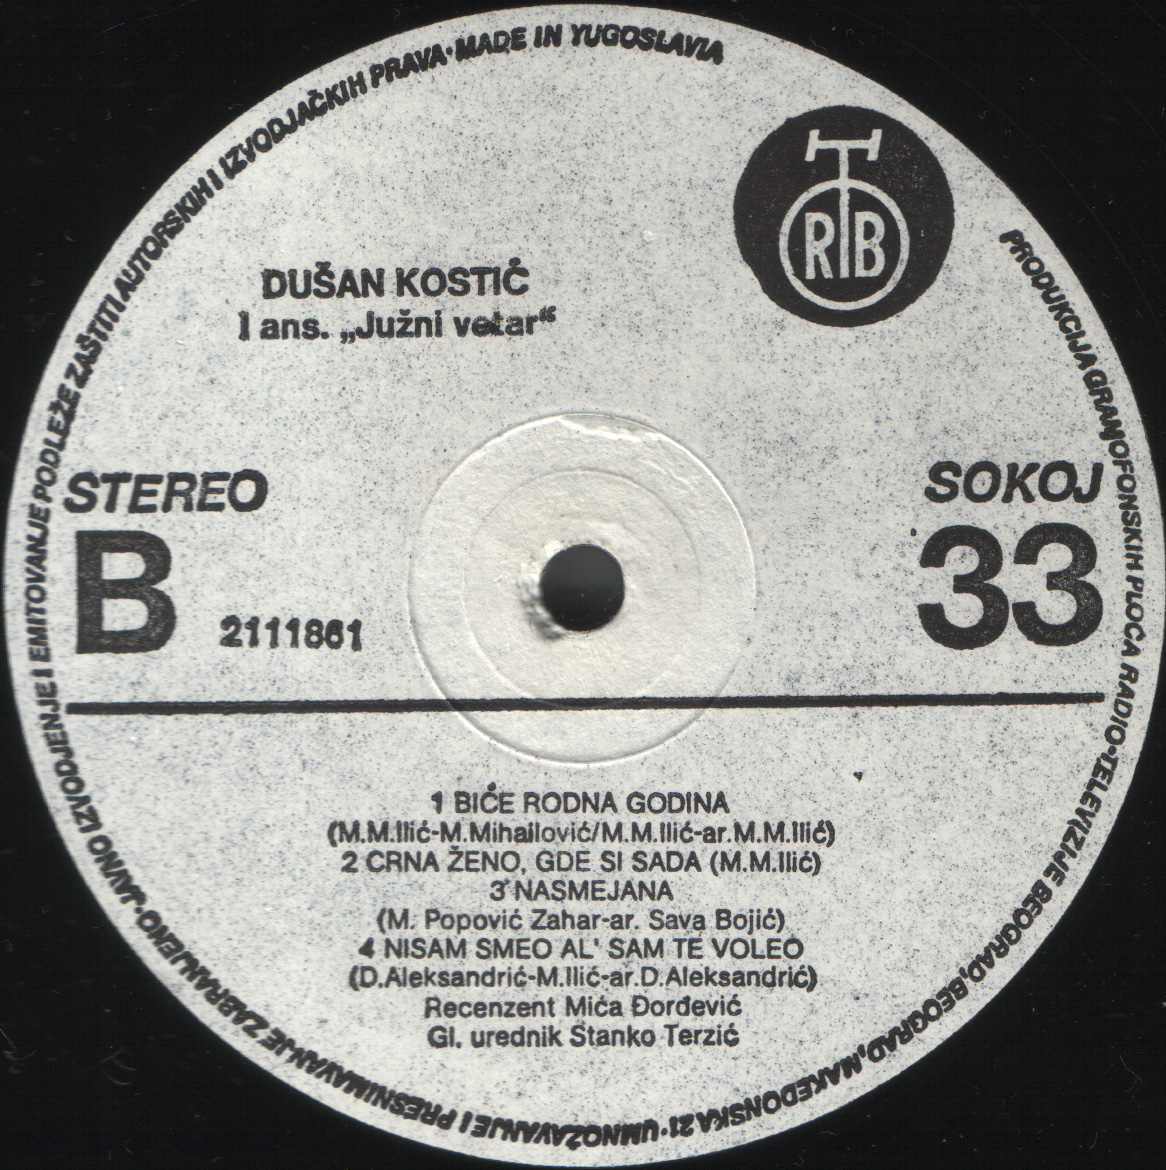 Dusan Kostic 1983 B